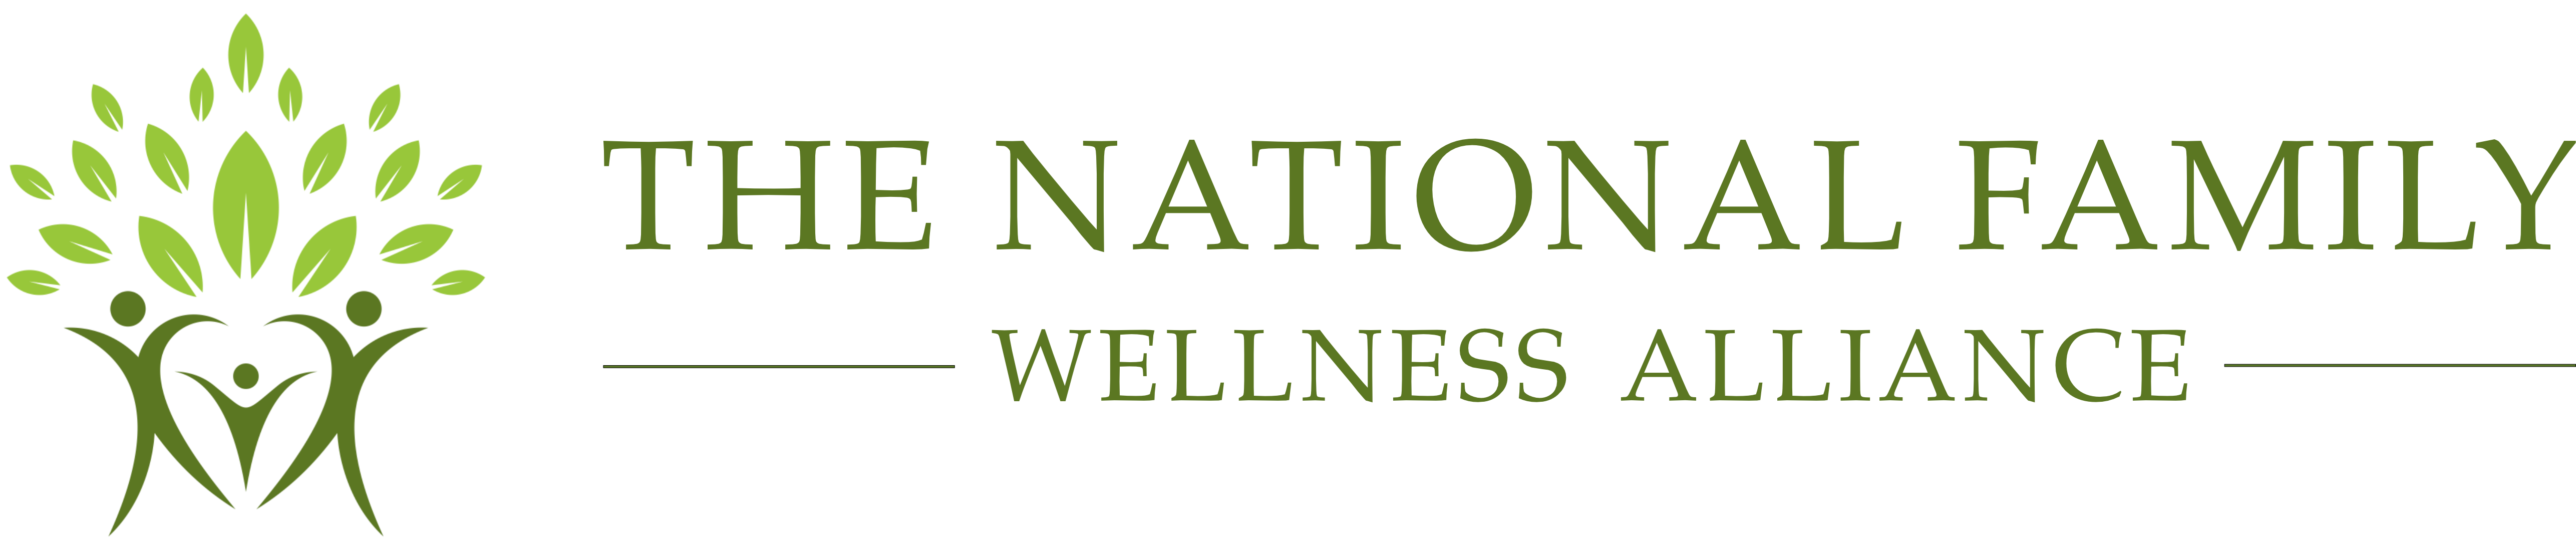 The National Family Wellness Alliance